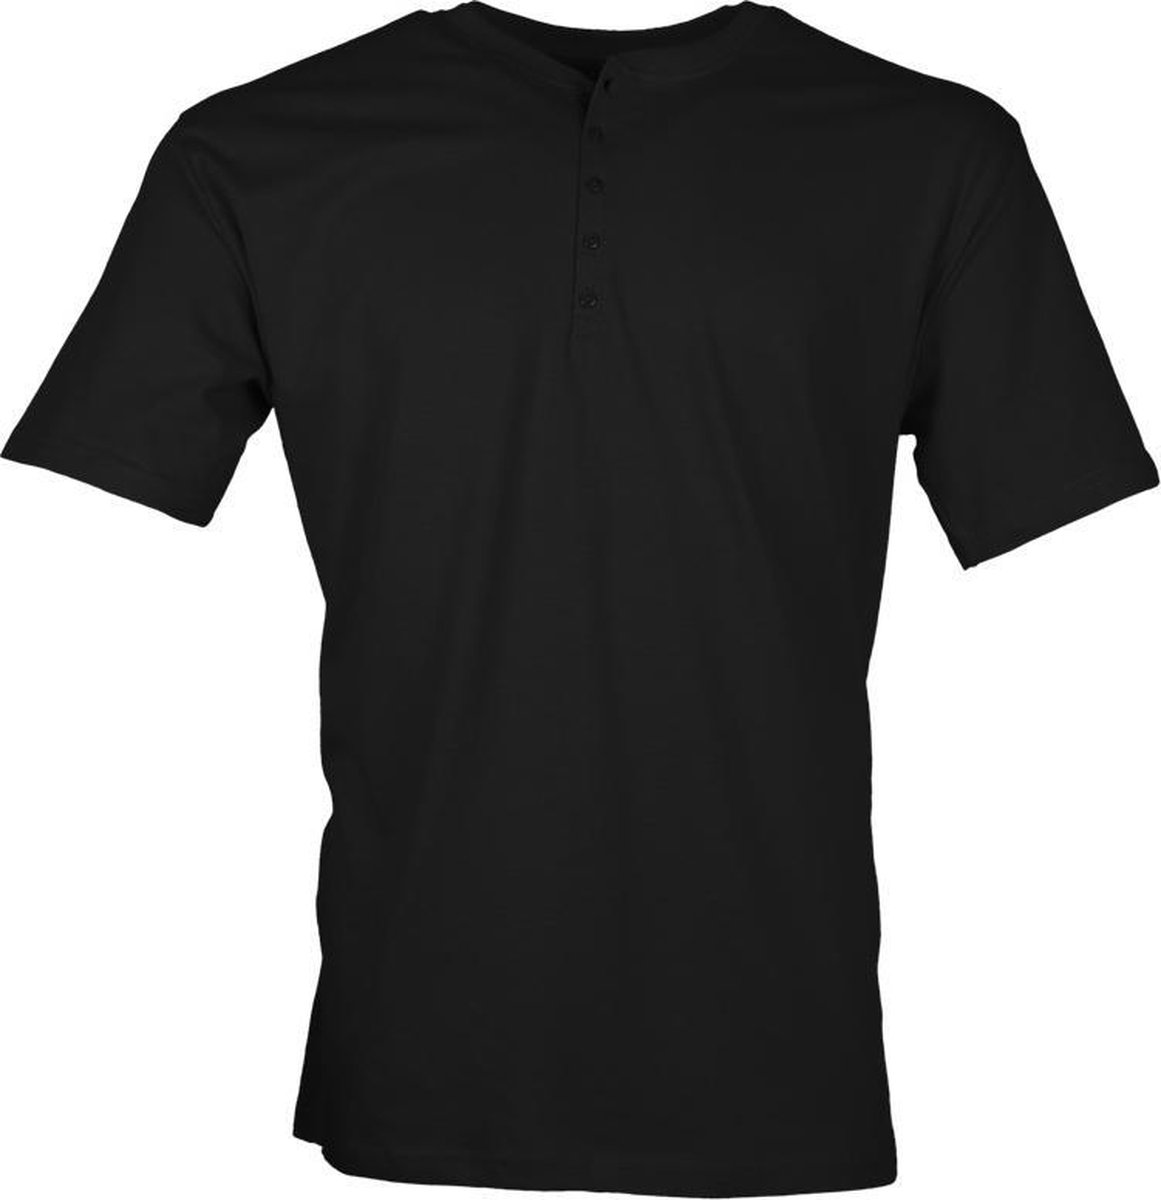 Losan Basic - Heren T-Shirt - Korte Mouw - Ronde Hals - Knoopjes - Zwart - Maat L